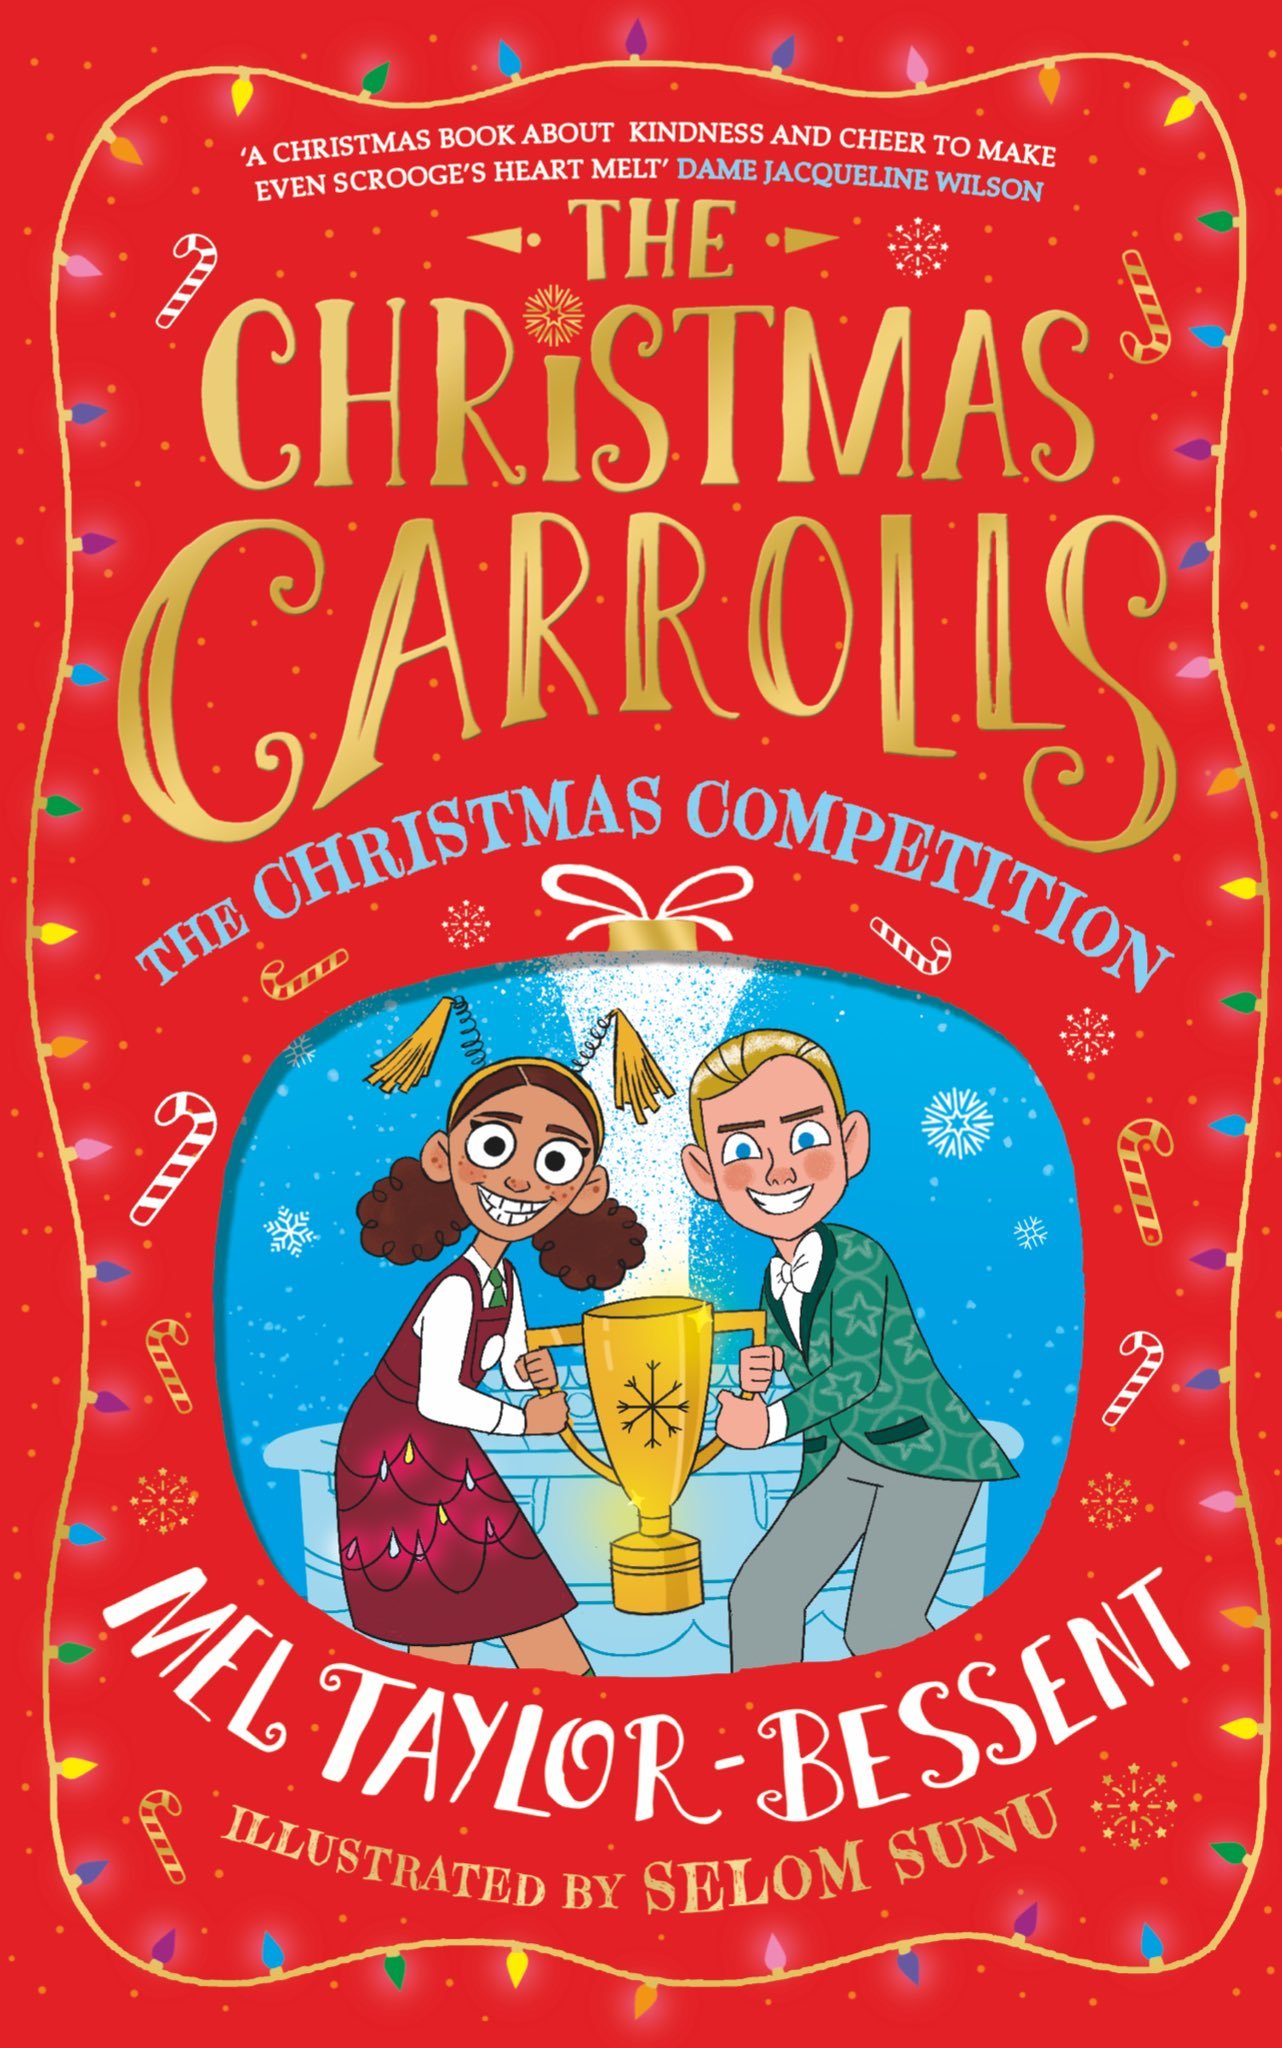 The Christmas Carrolls: The Christmas Competition